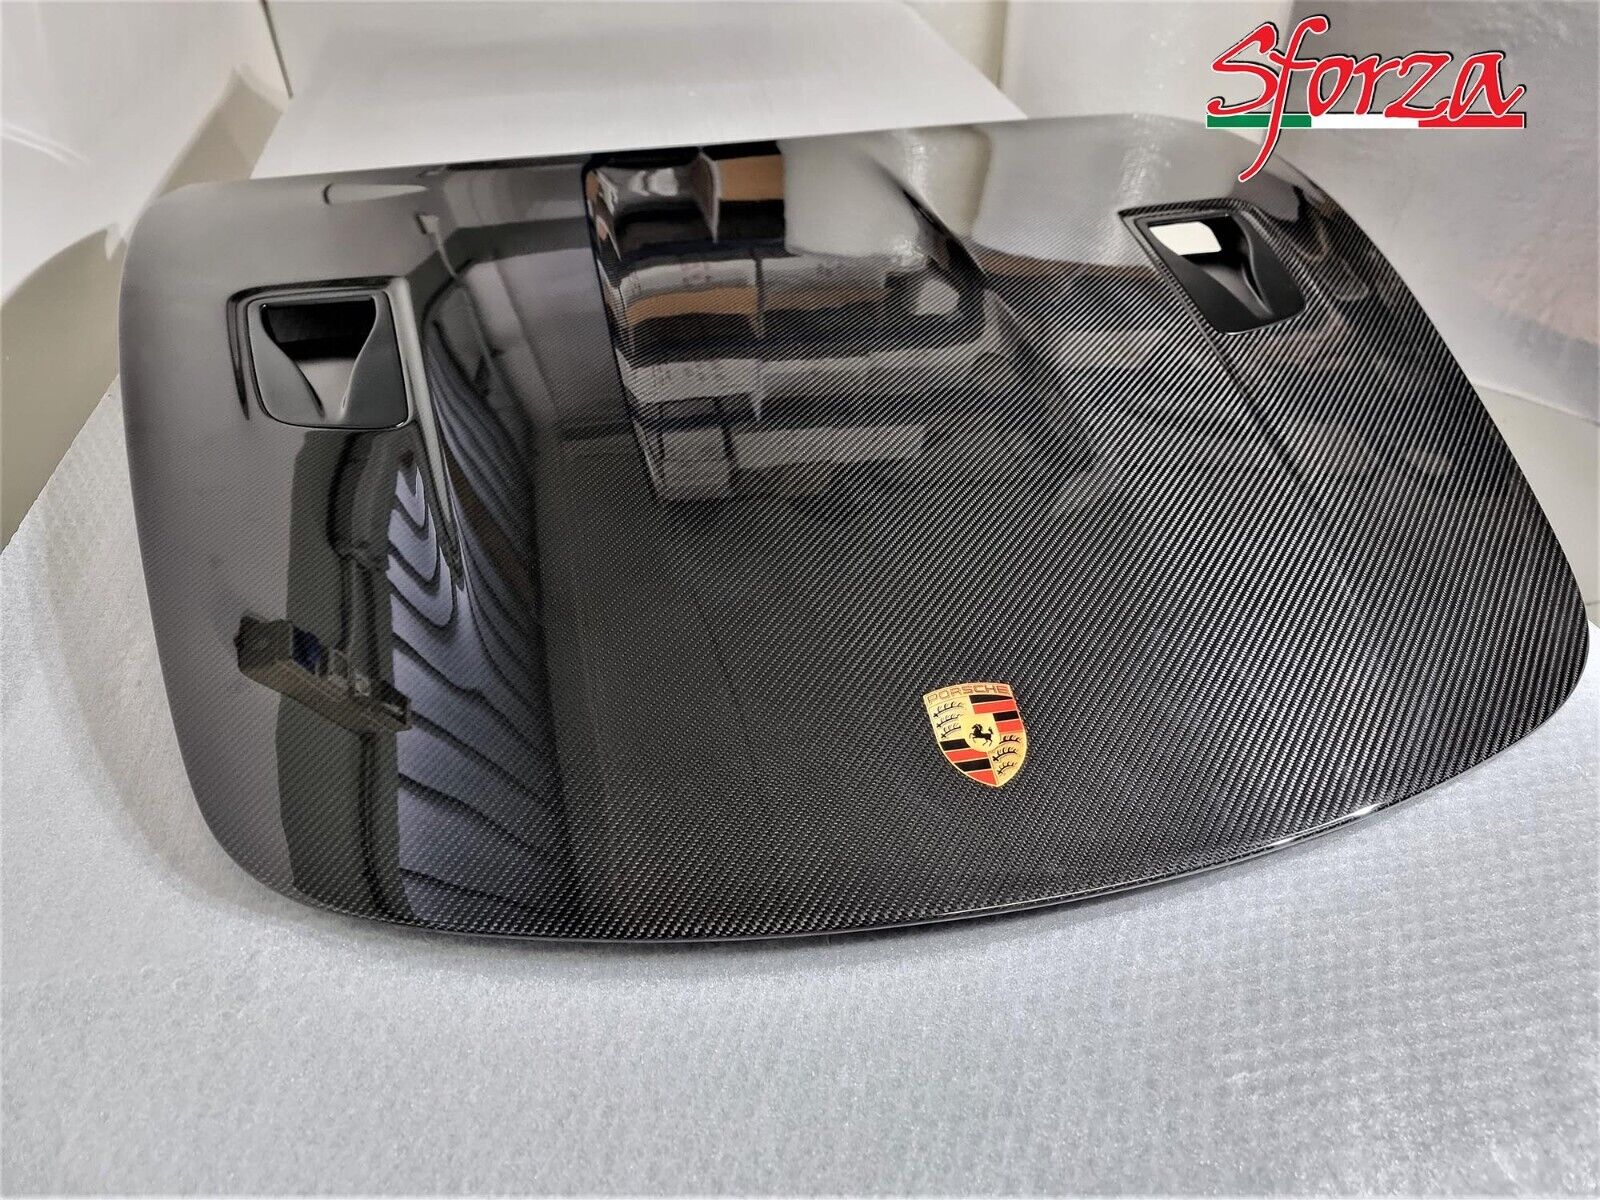 Porsche 911 991.2 GT3 RS - GT2 RS carbon fiber front Hood with NACA vents